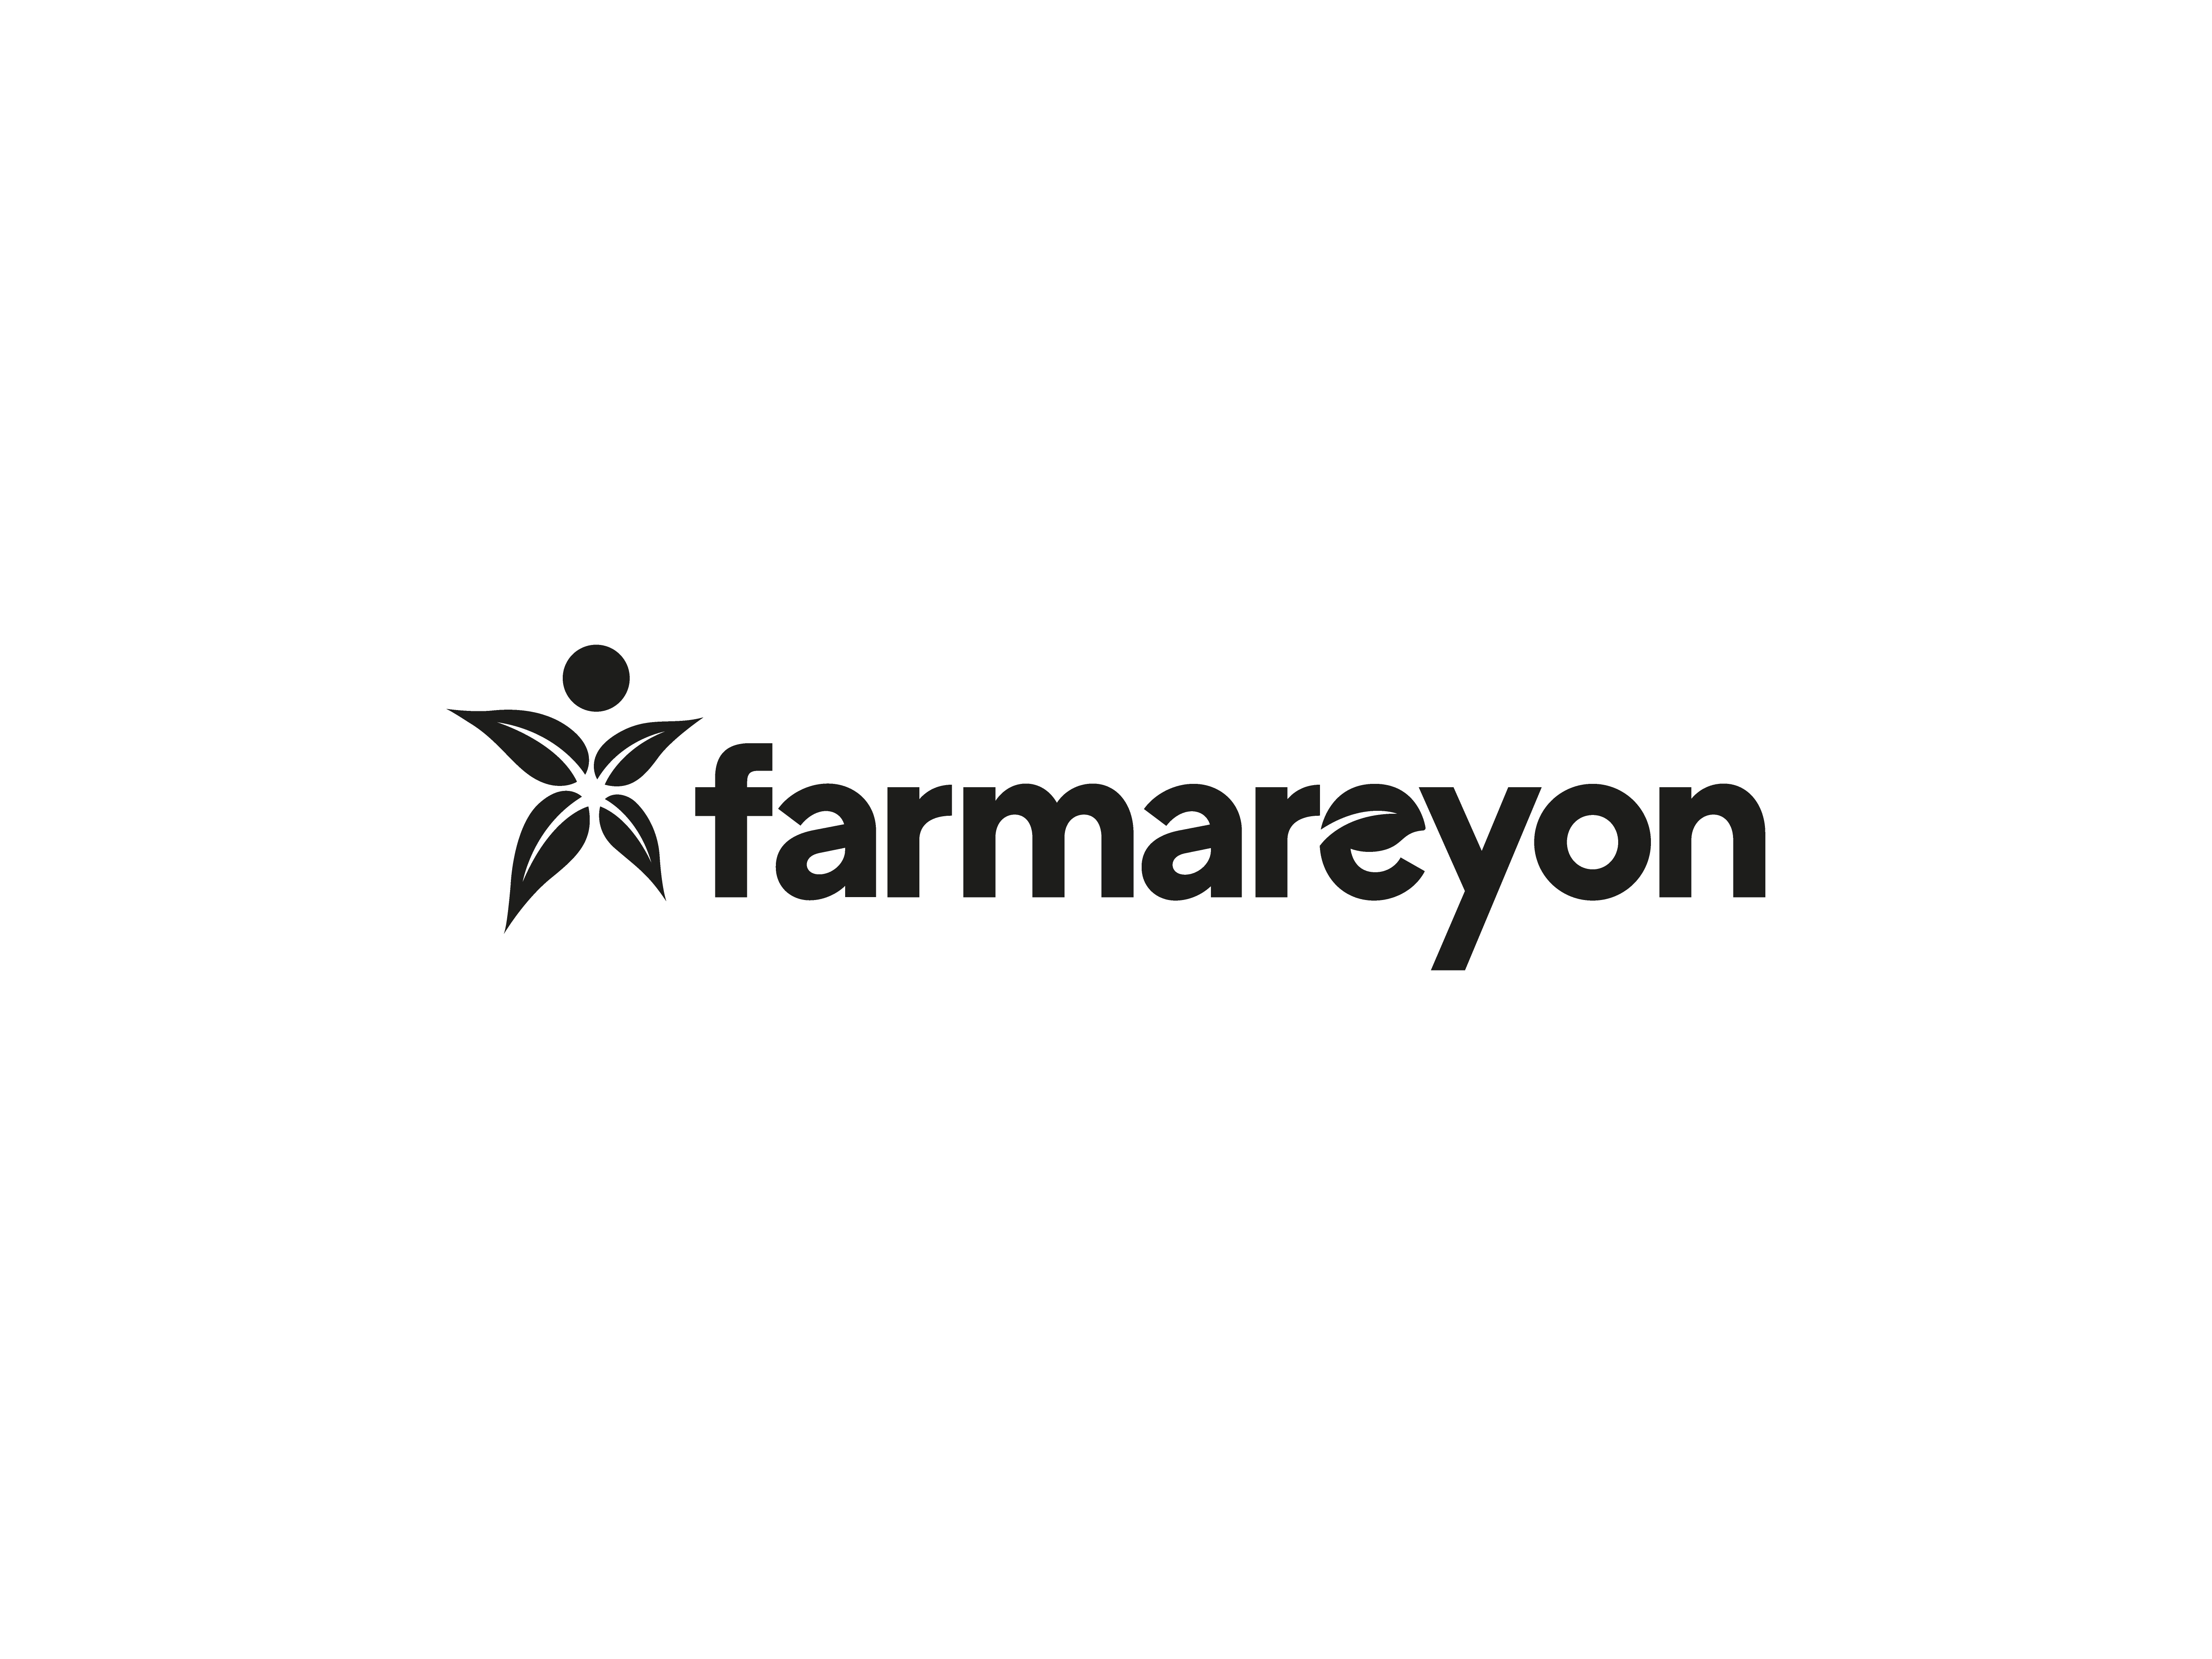 farmareyon-logo